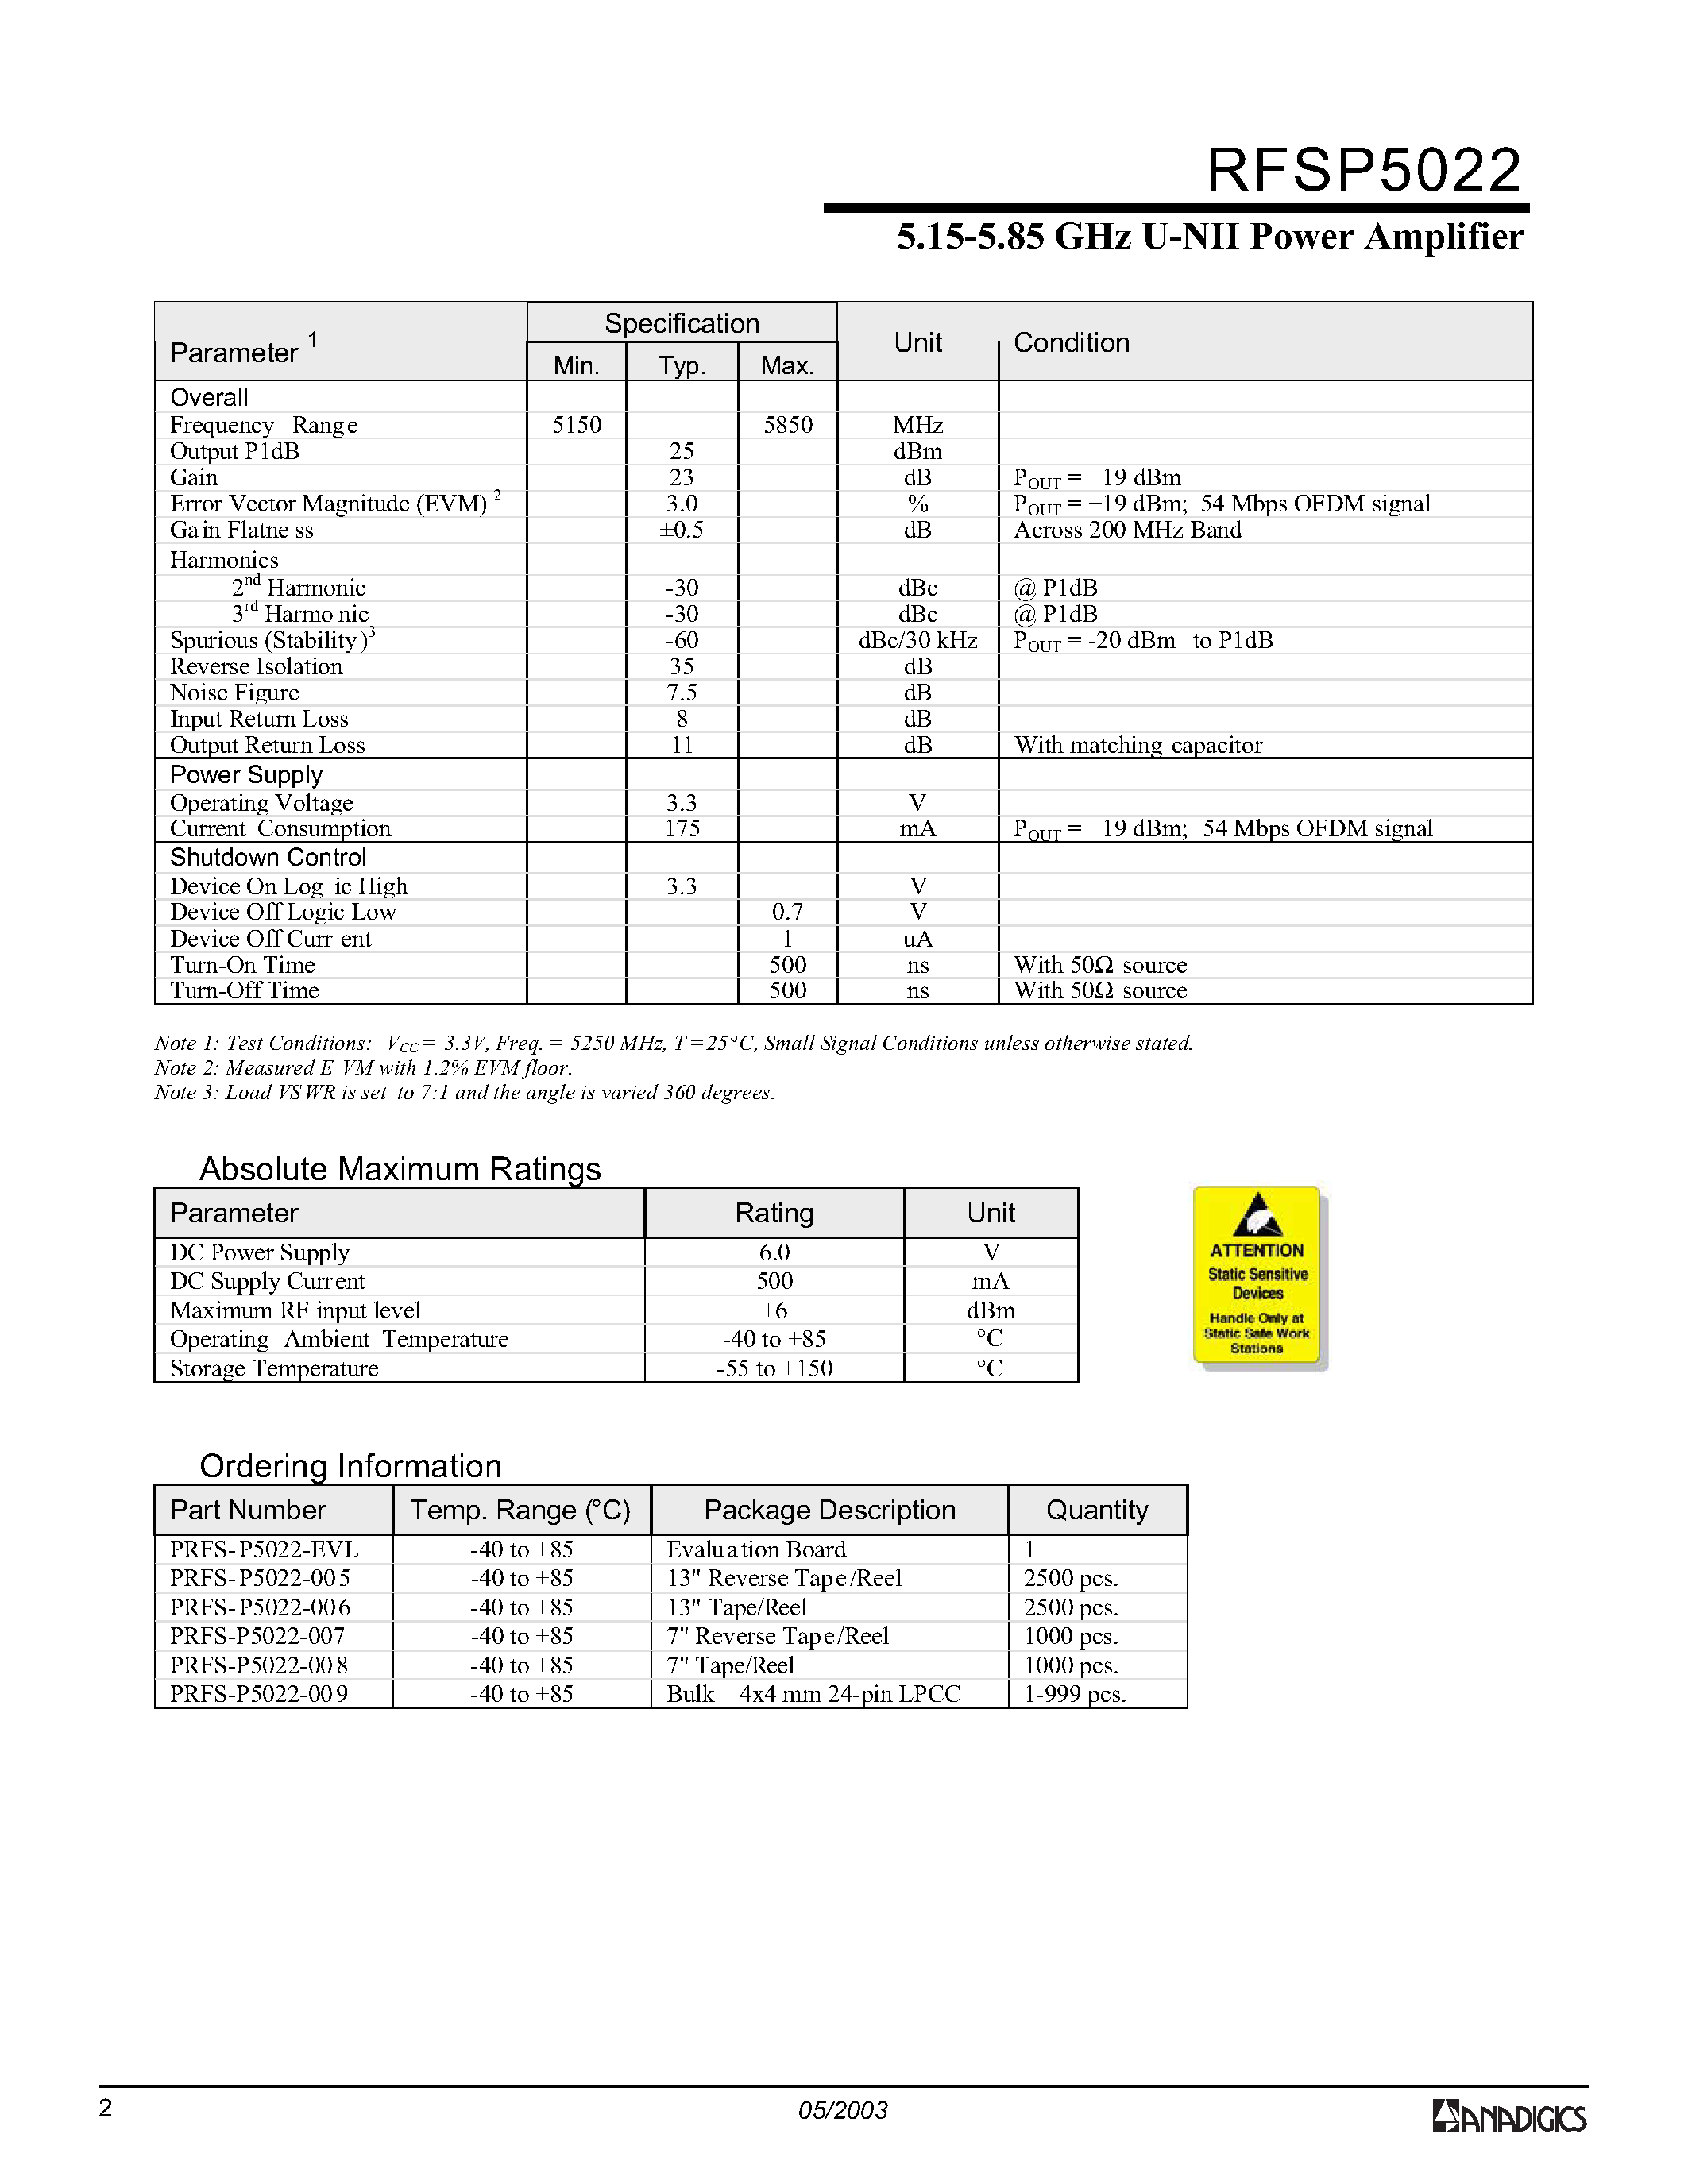 Даташит PRFS-P5022-009 - 5.15-5.85 GHz U-NII Power Amplifier страница 2